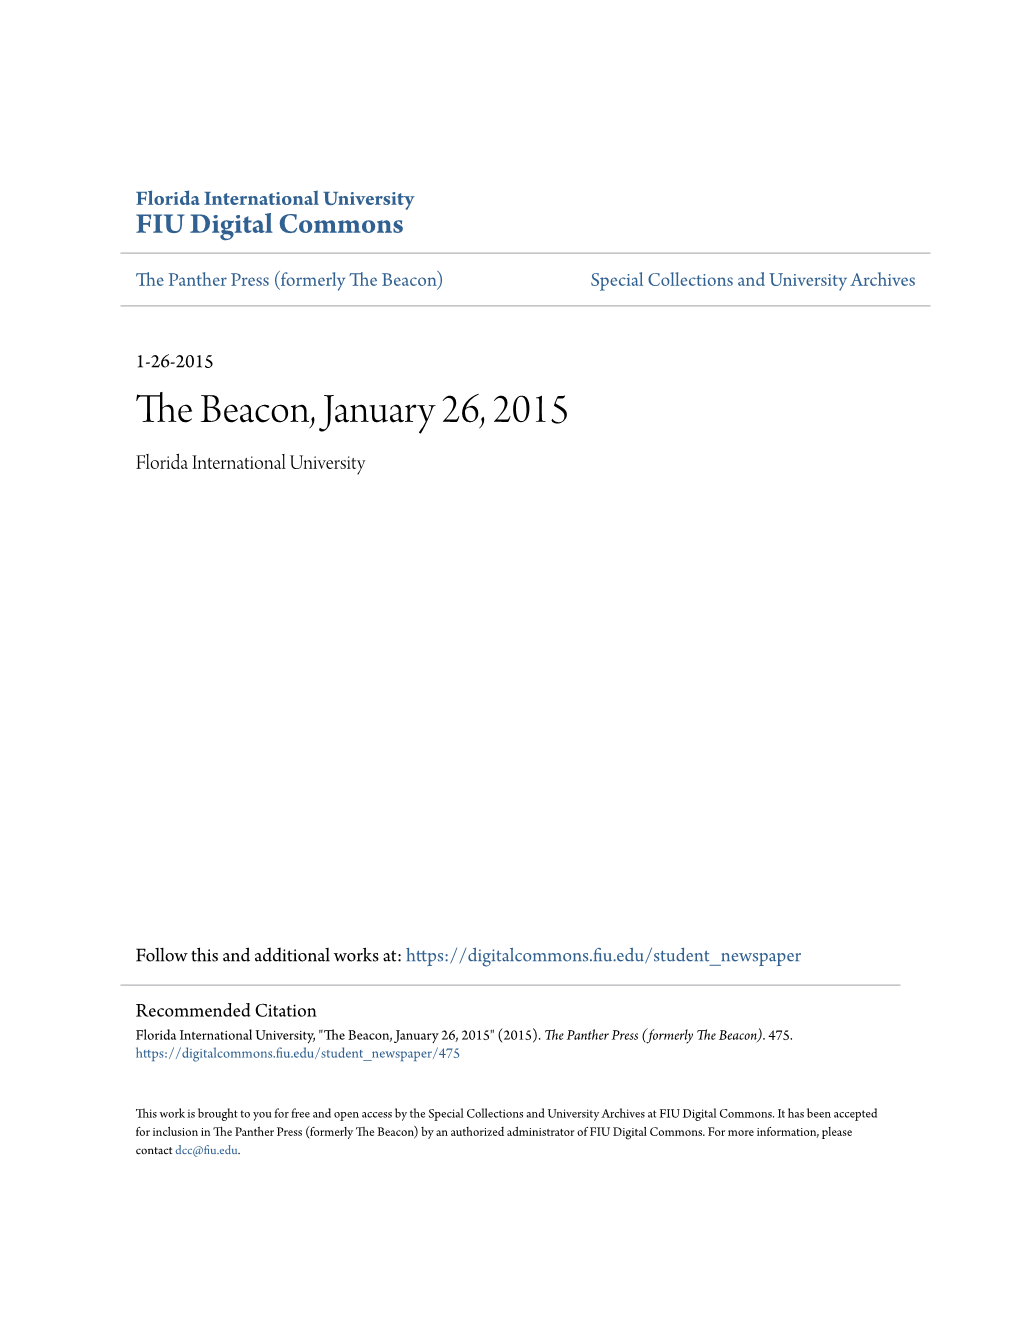 The Beacon, January 26, 2015 Florida International University